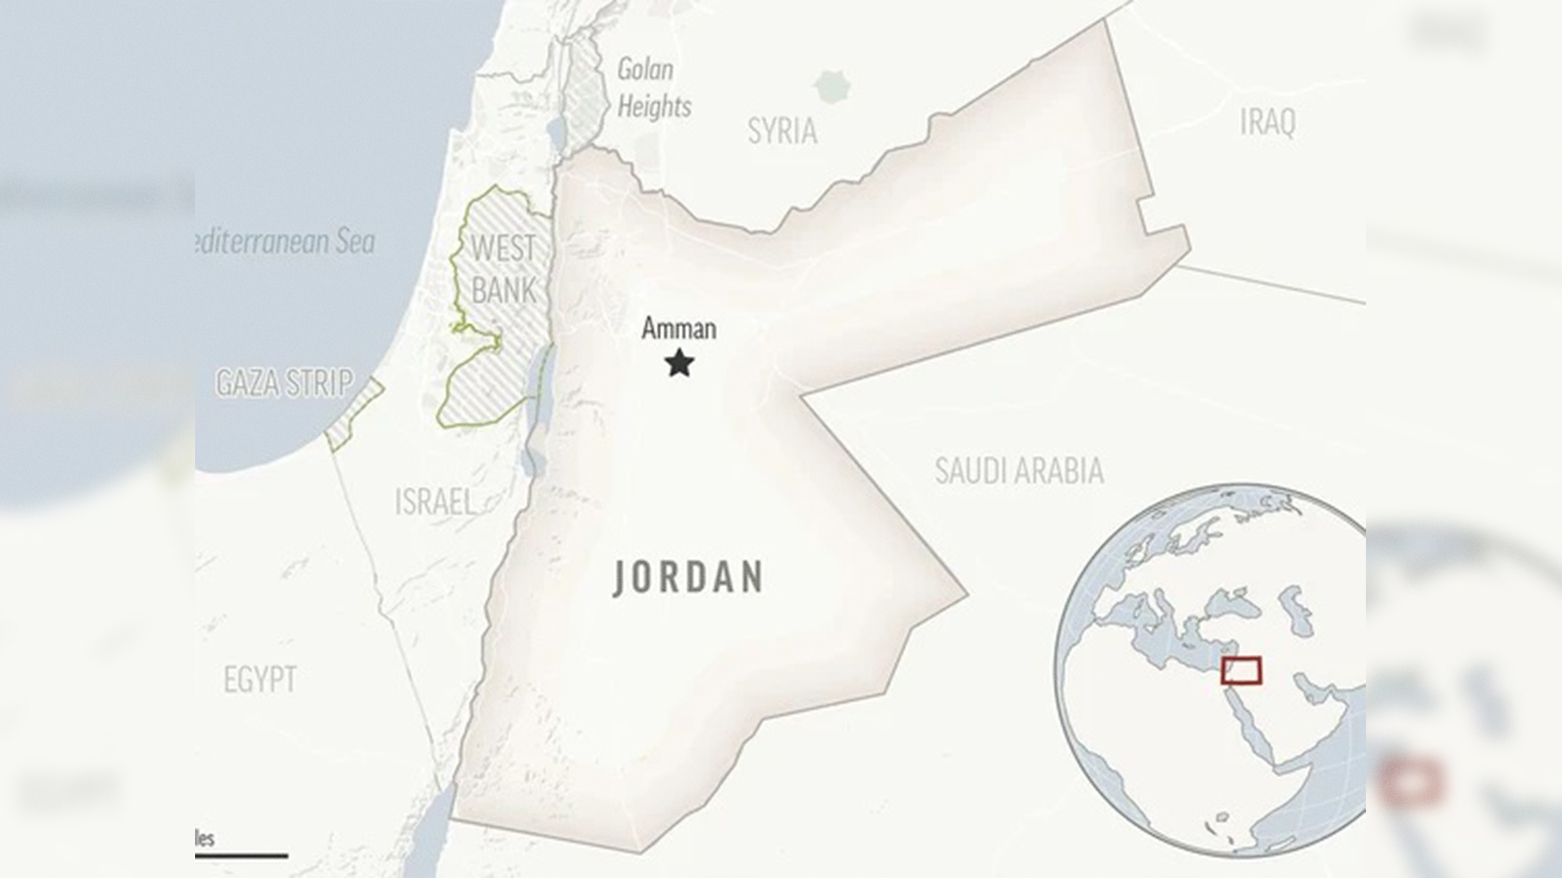 Jordan kills  drug smugglers on the Syrian border The area is known for an addictive amphetamine